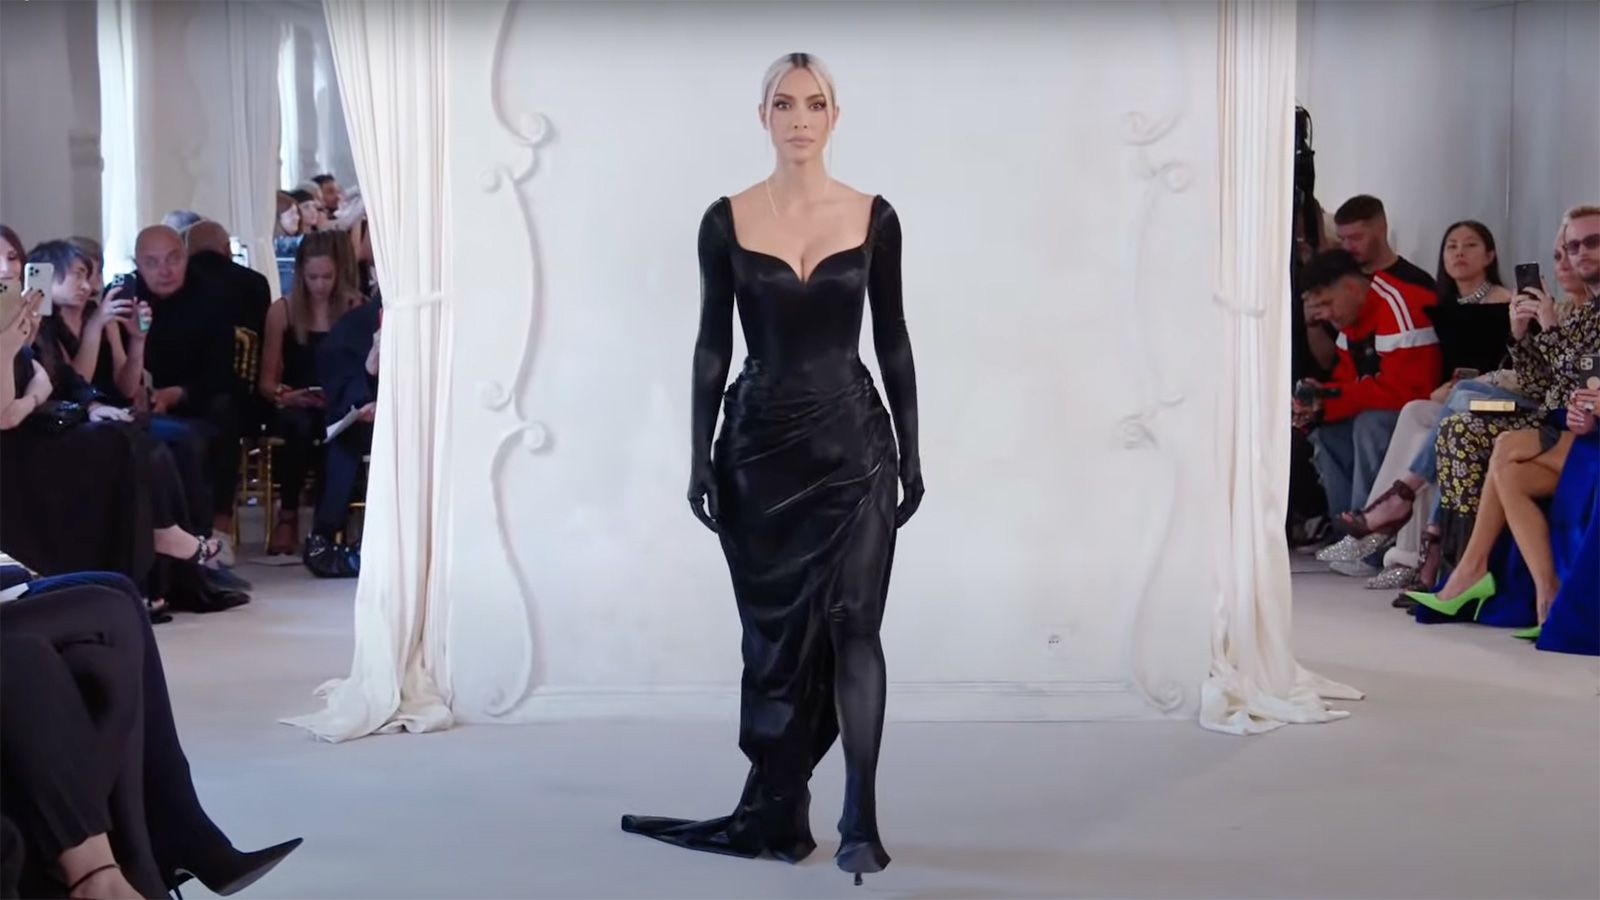 specificere Lily reform Kim Kardashian walks in Balenciaga show at Paris Couture Fashion Week | CNN